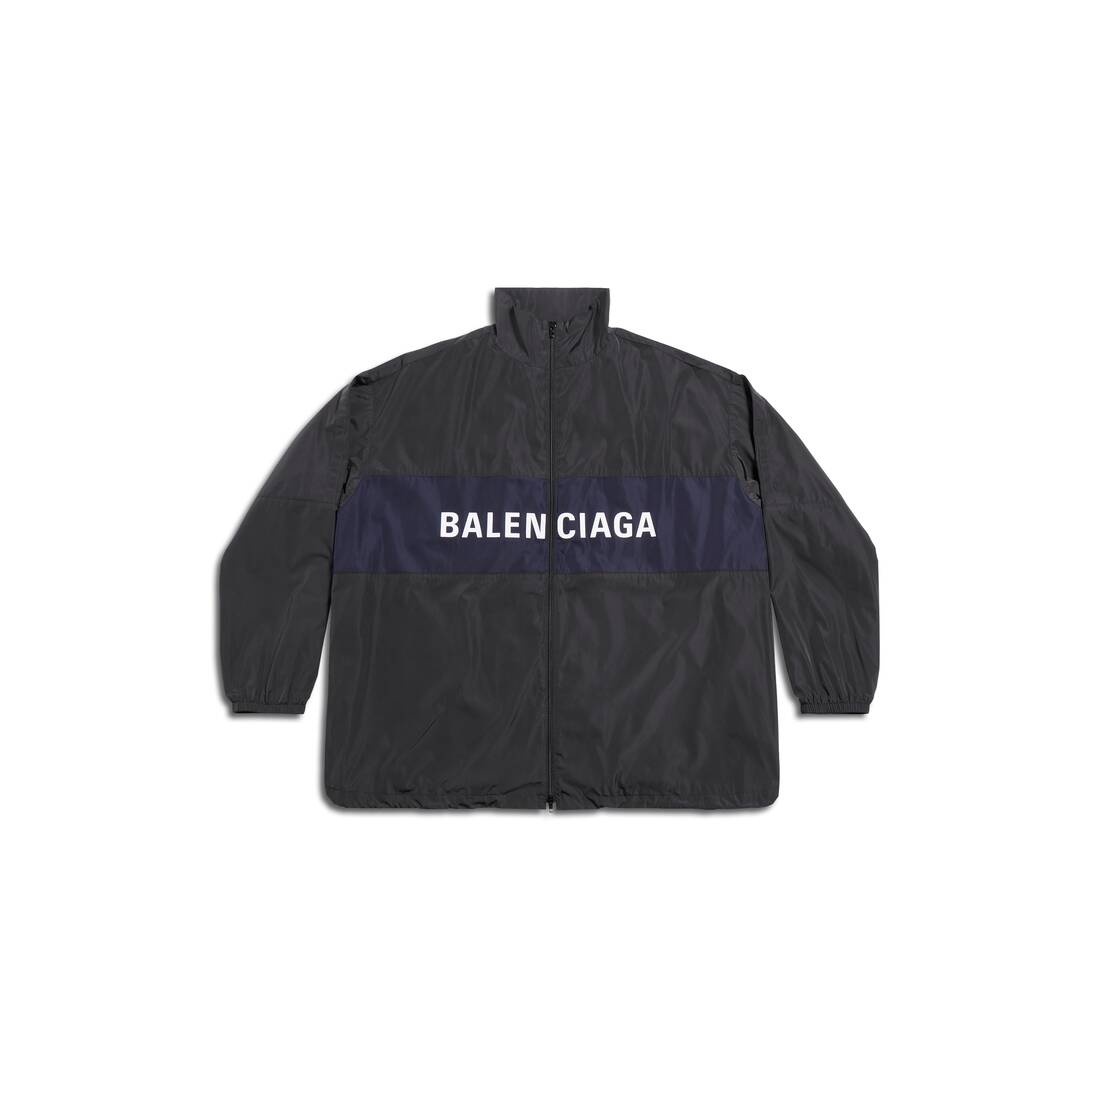 Balenciaga Zip-up Jacket in Black - 1